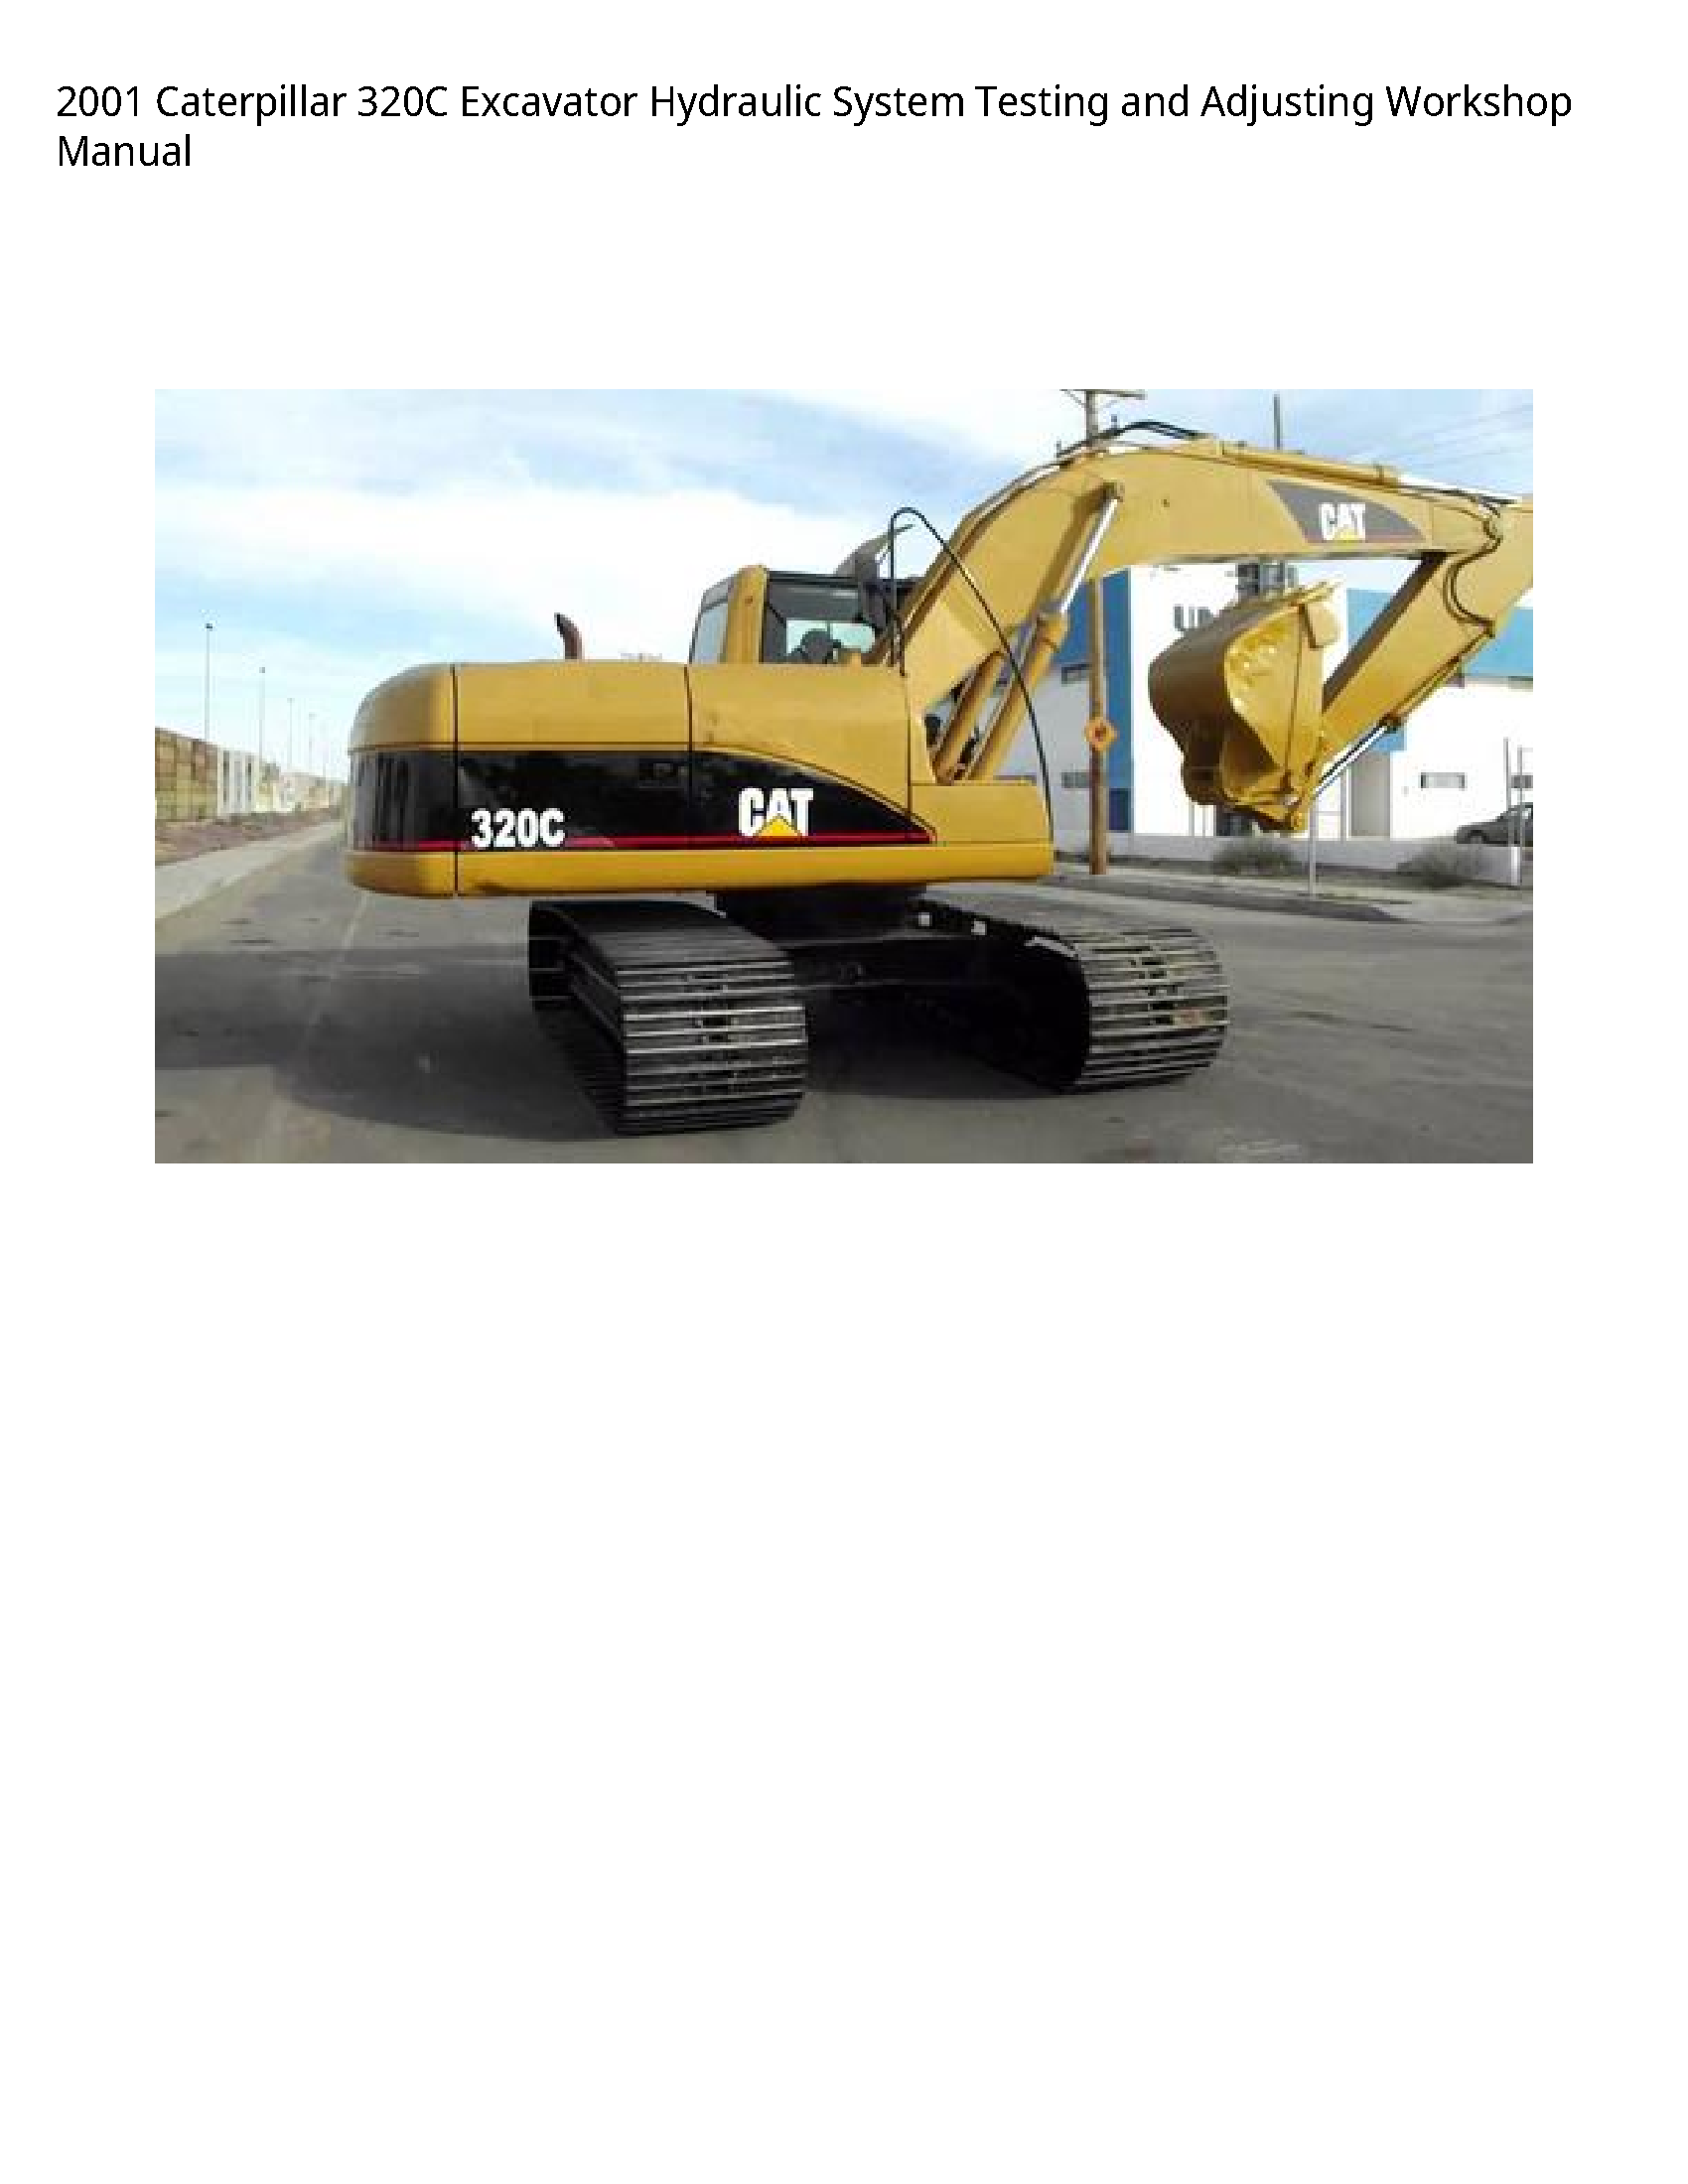 Caterpillar 320C Excavator Hydraulic System Testing  Adjusting manual